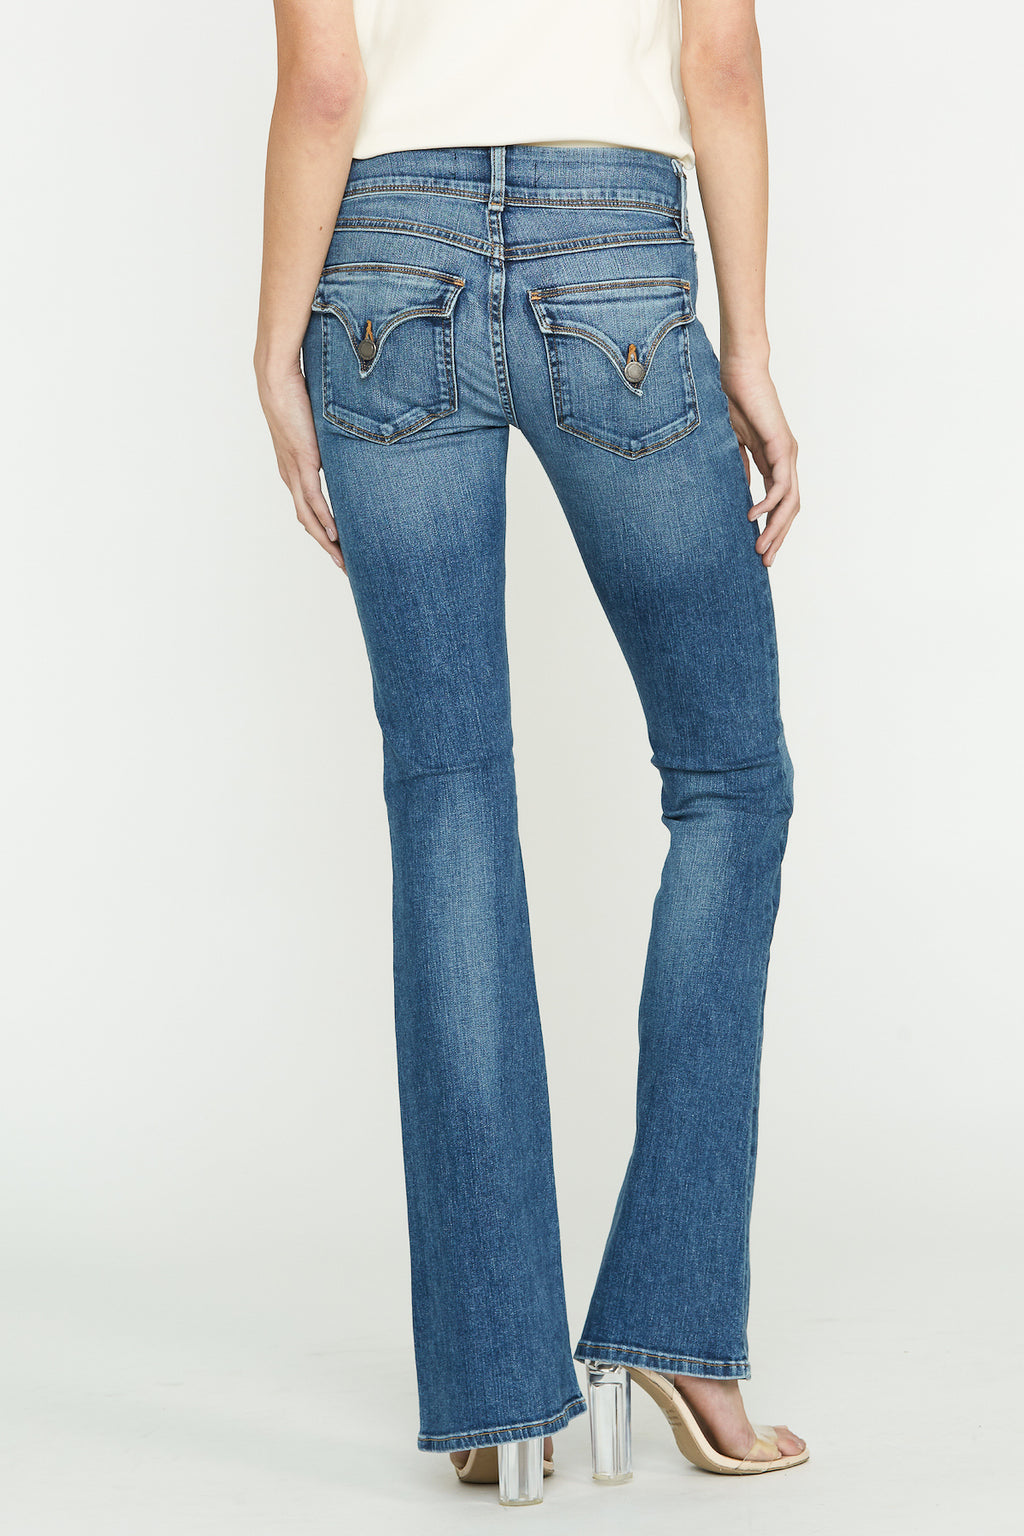 hudson jeans sale womens